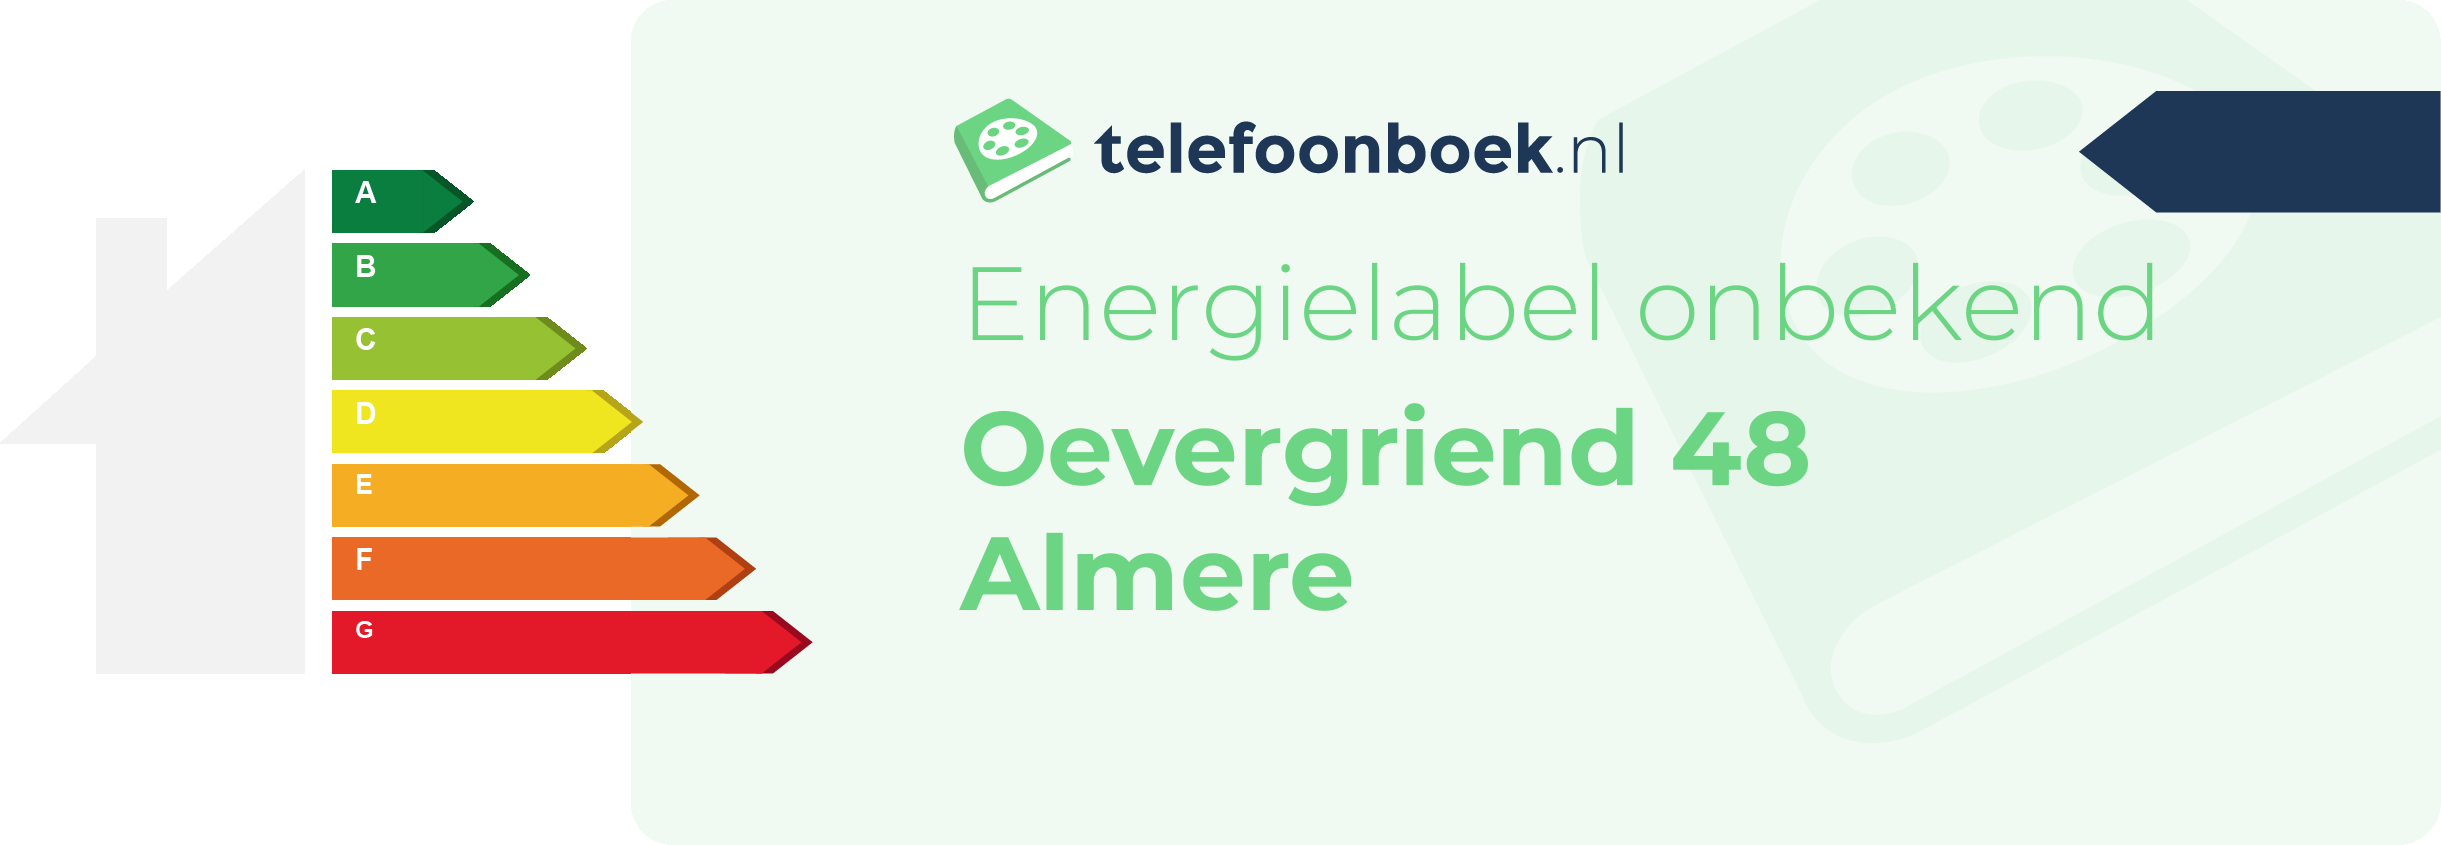 Energielabel Oevergriend 48 Almere